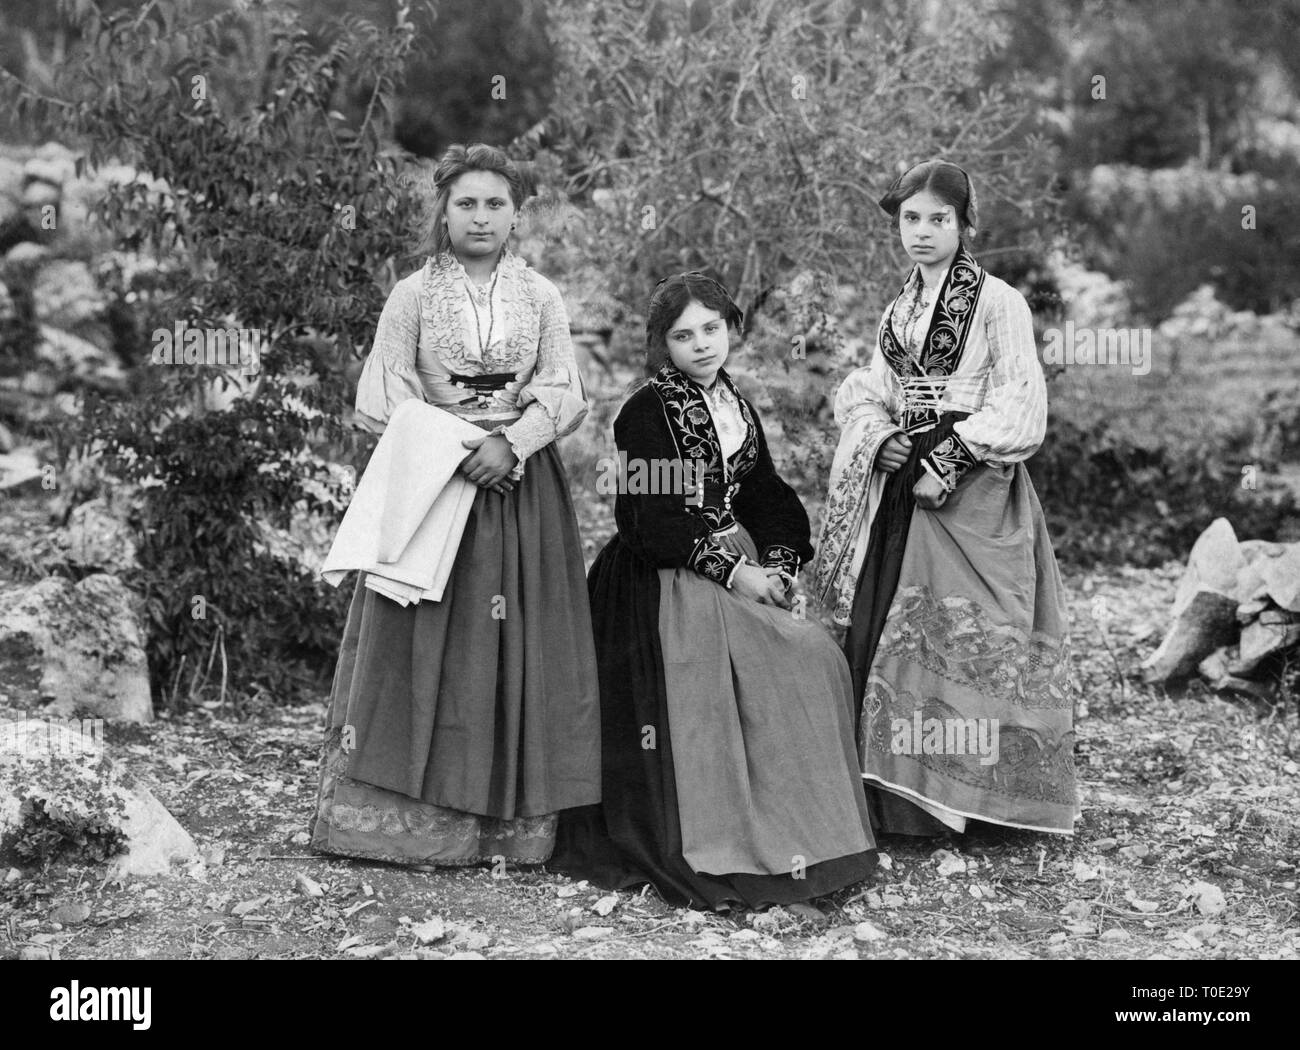 Les femmes en costume traditionnel, Piana dei Greci, Sicile, Italie 1910  Photo Stock - Alamy